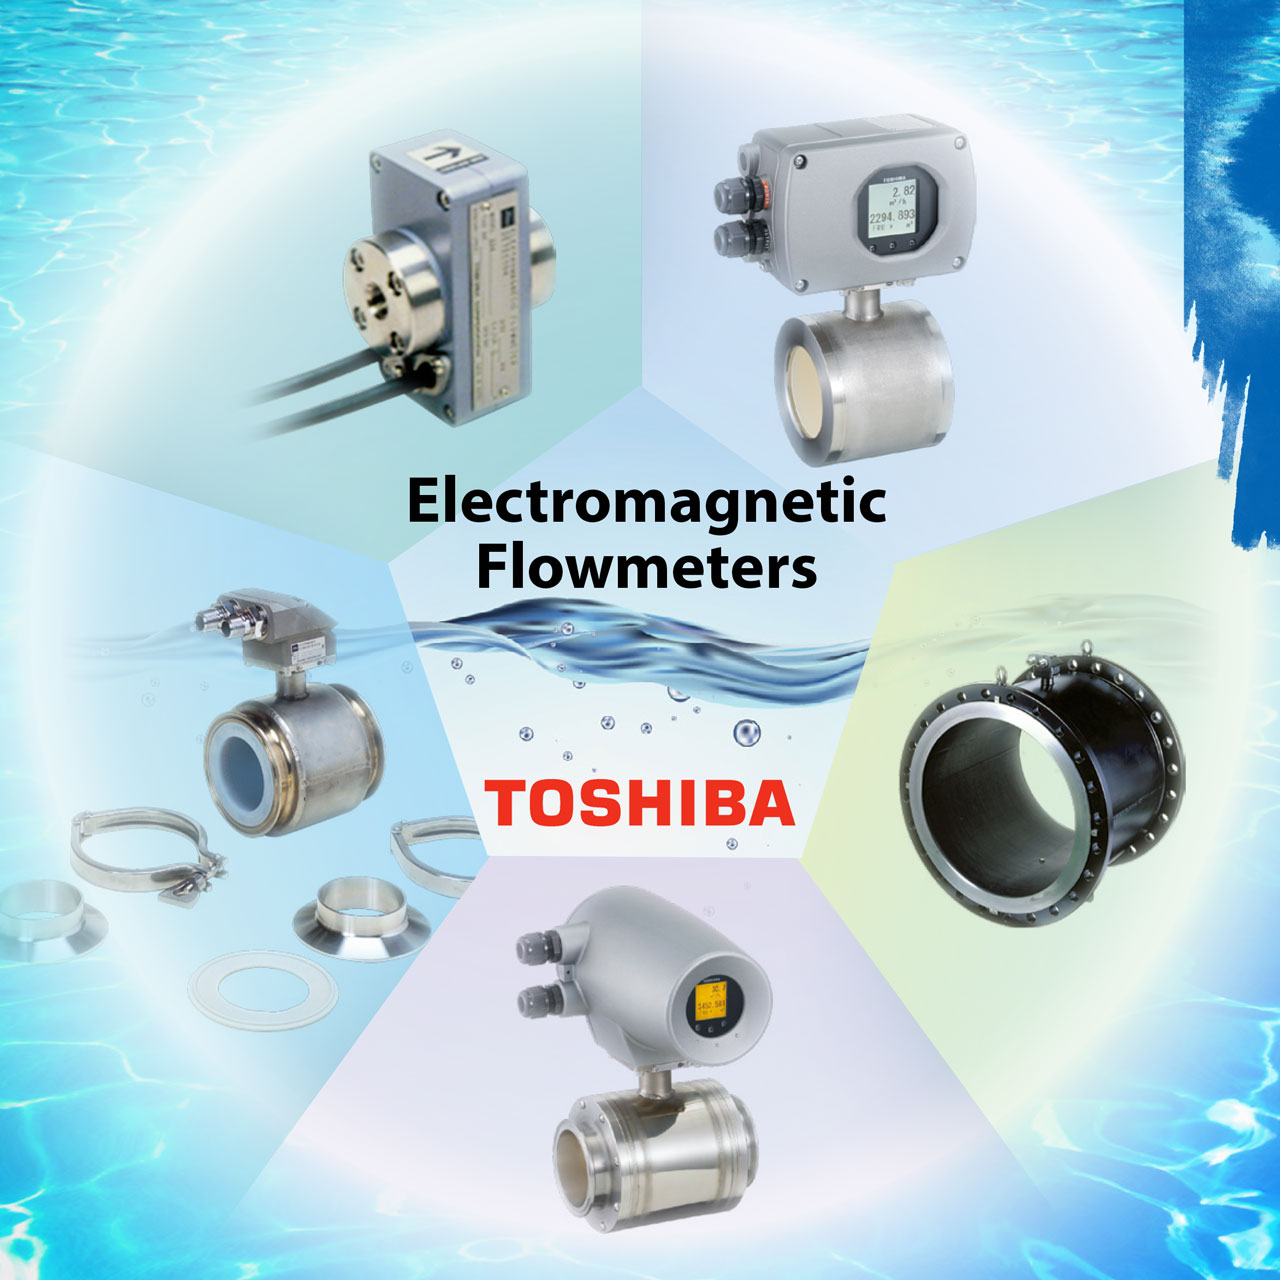 Toshiba Electromagnetic Flowmeters